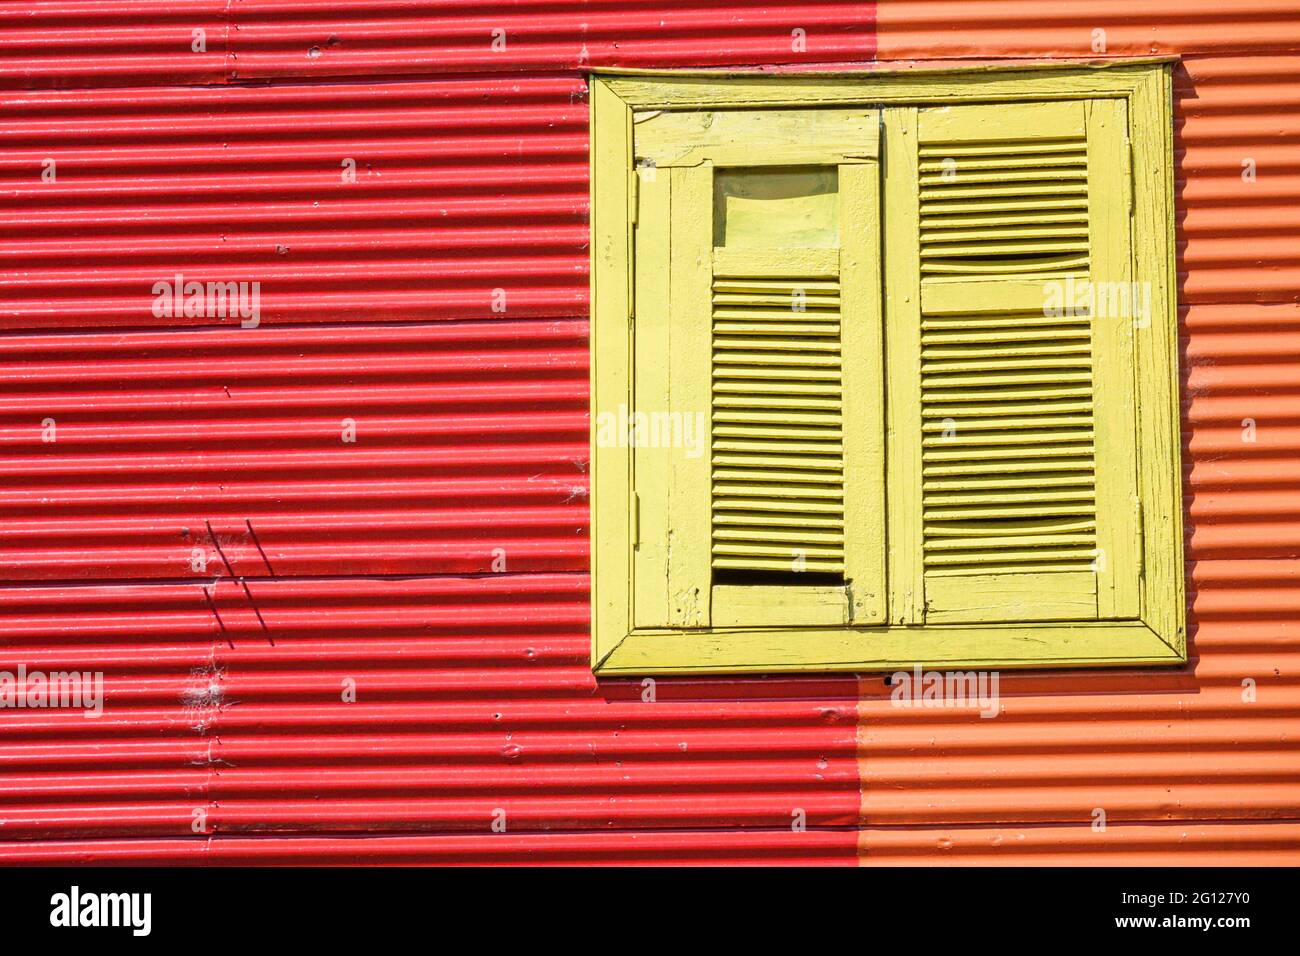 Argentina Buenos Aires Caminito Barrio de la Boca iconic neighborhood cultural landmark painted buildings Conventillo urban housing window shutters br Stock Photo